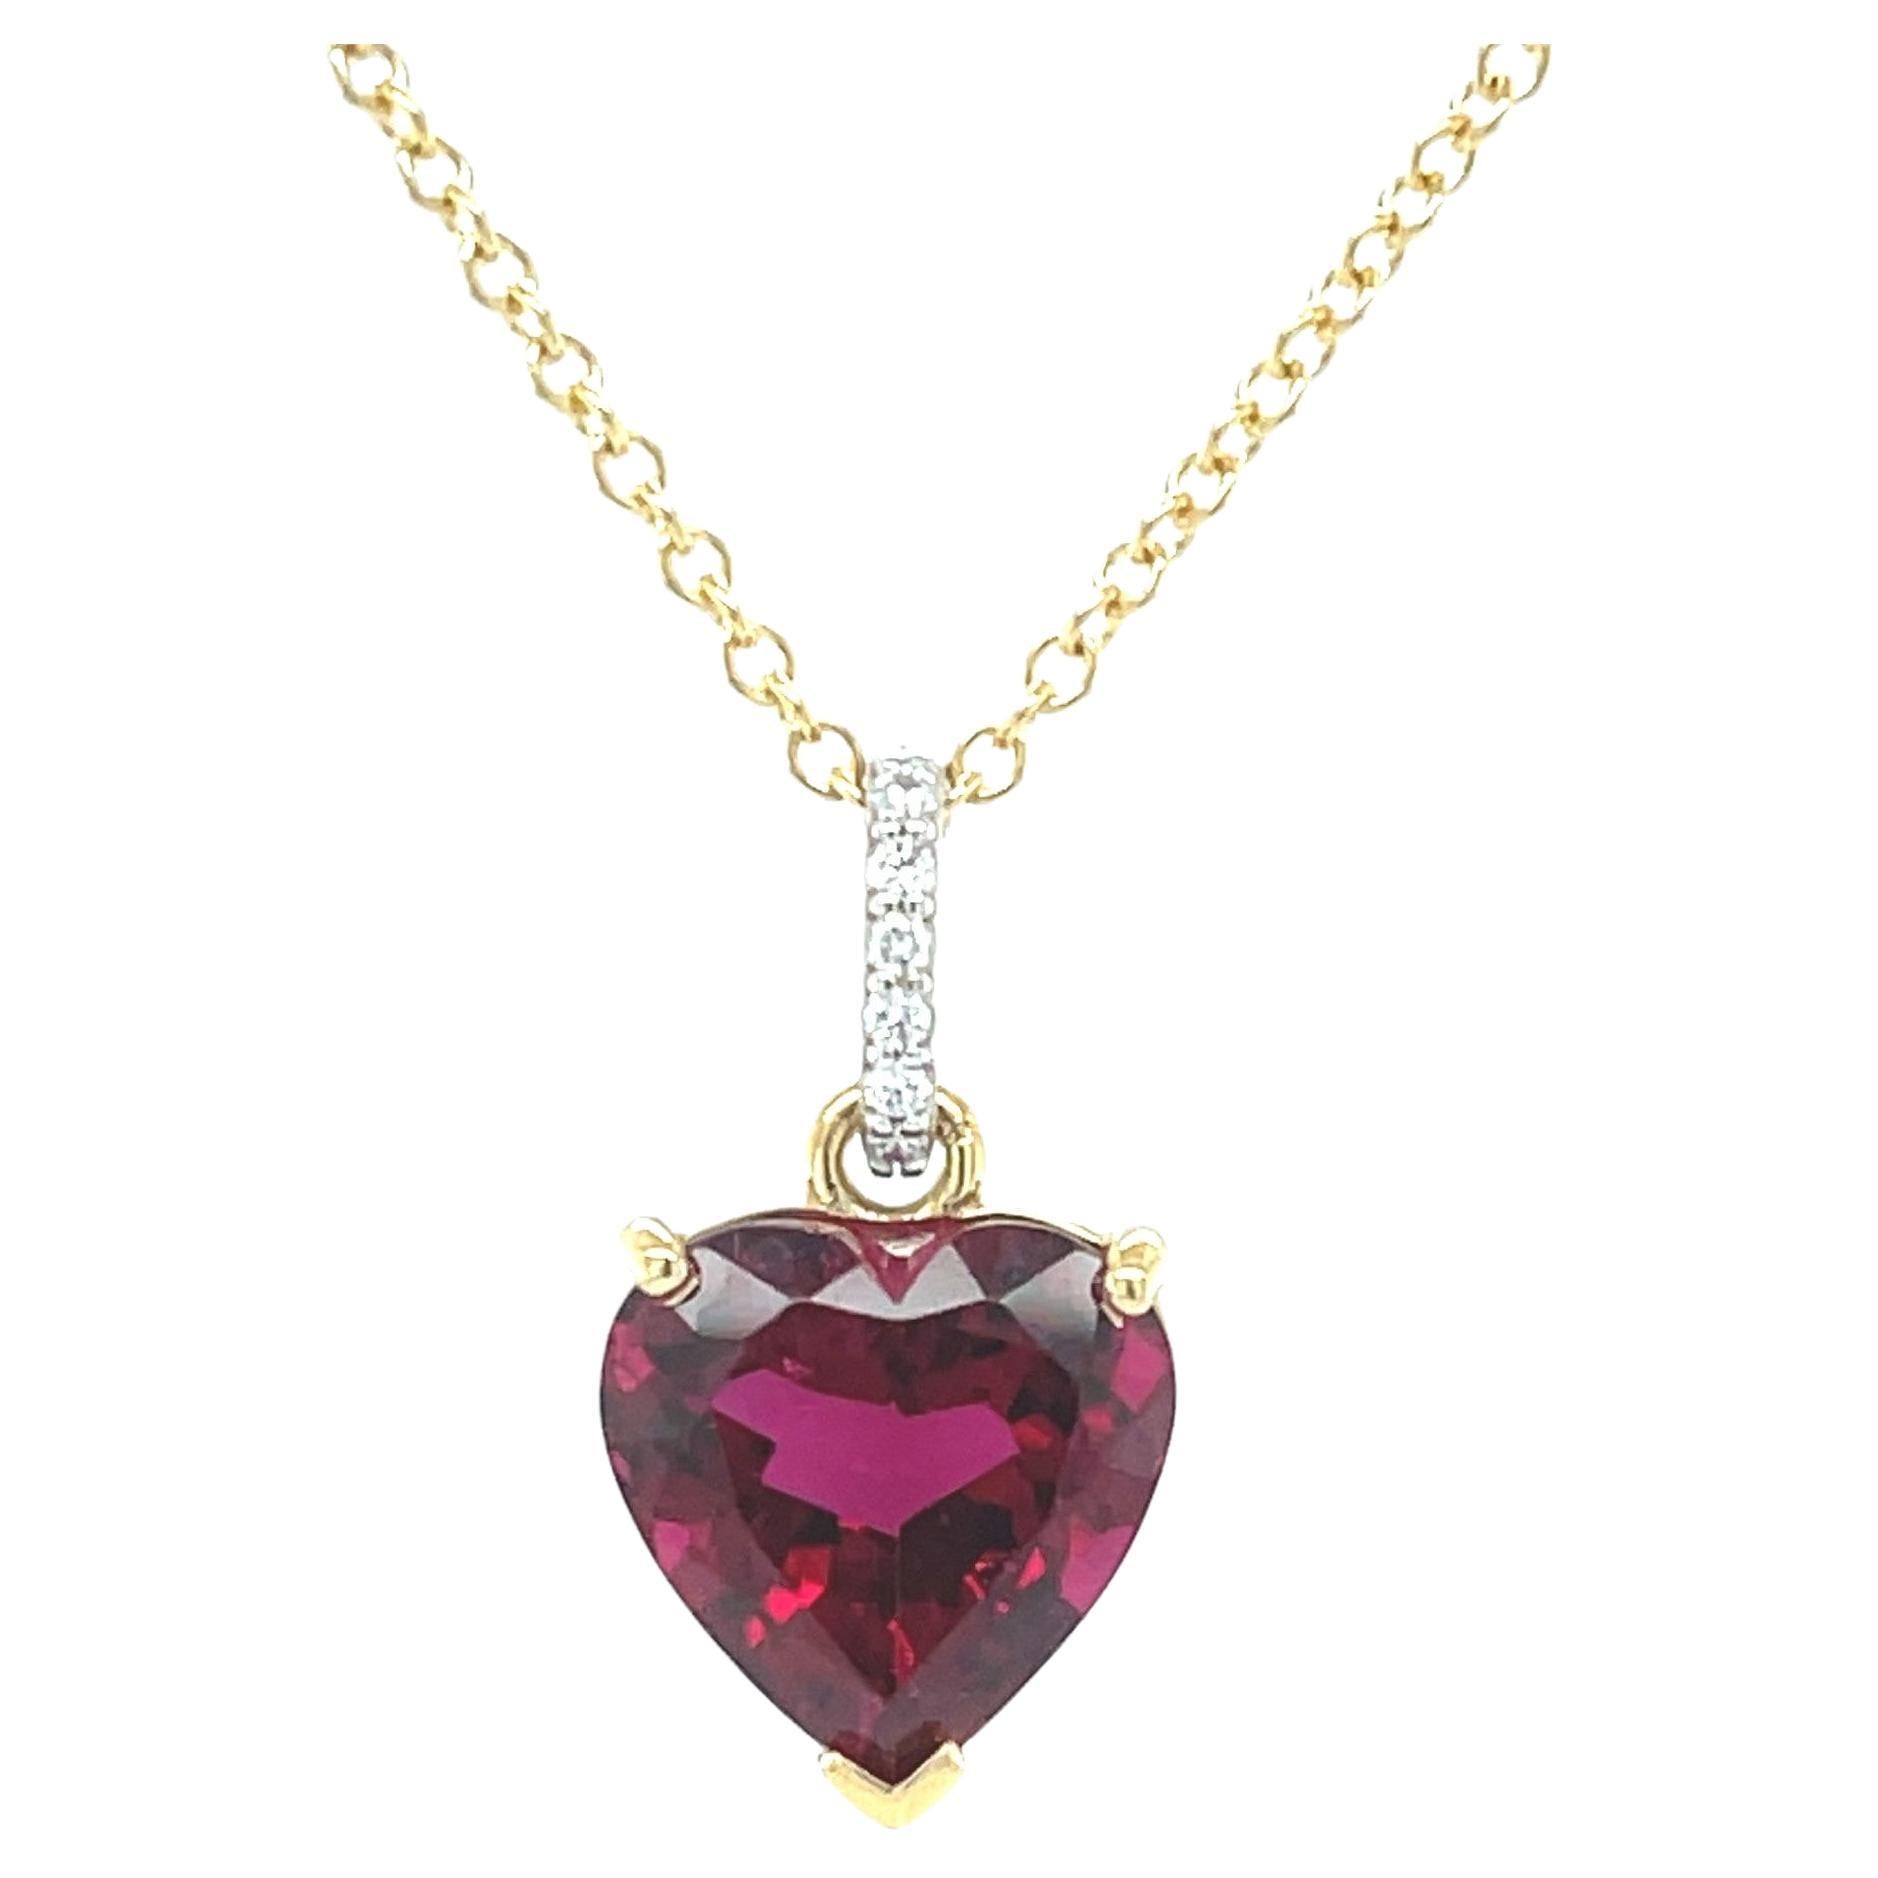 5.14 Carat Heart Shaped Rubellite Tourmaline & Diamond Necklace  For Sale